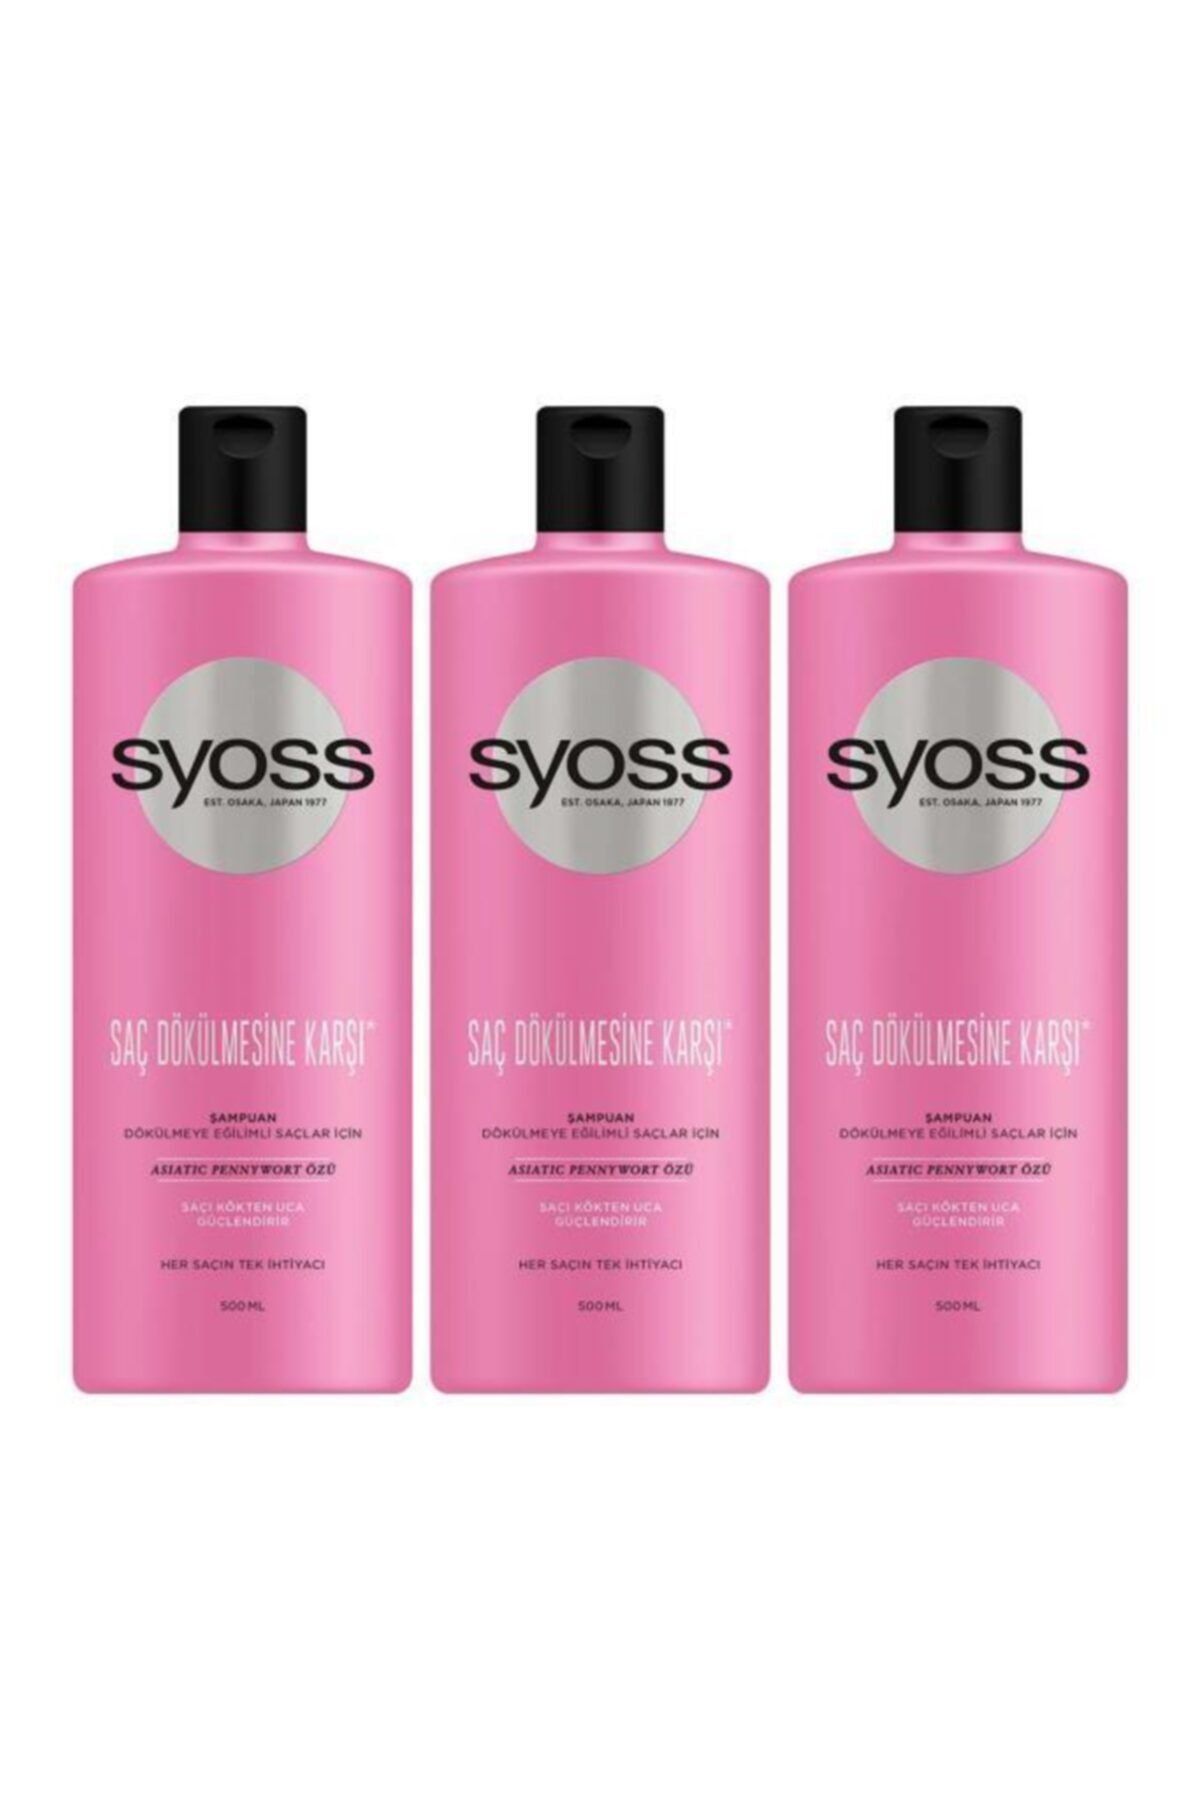 Syoss Saç Dökülmesine Karşı Şampuan 500 ml X 3 Adet